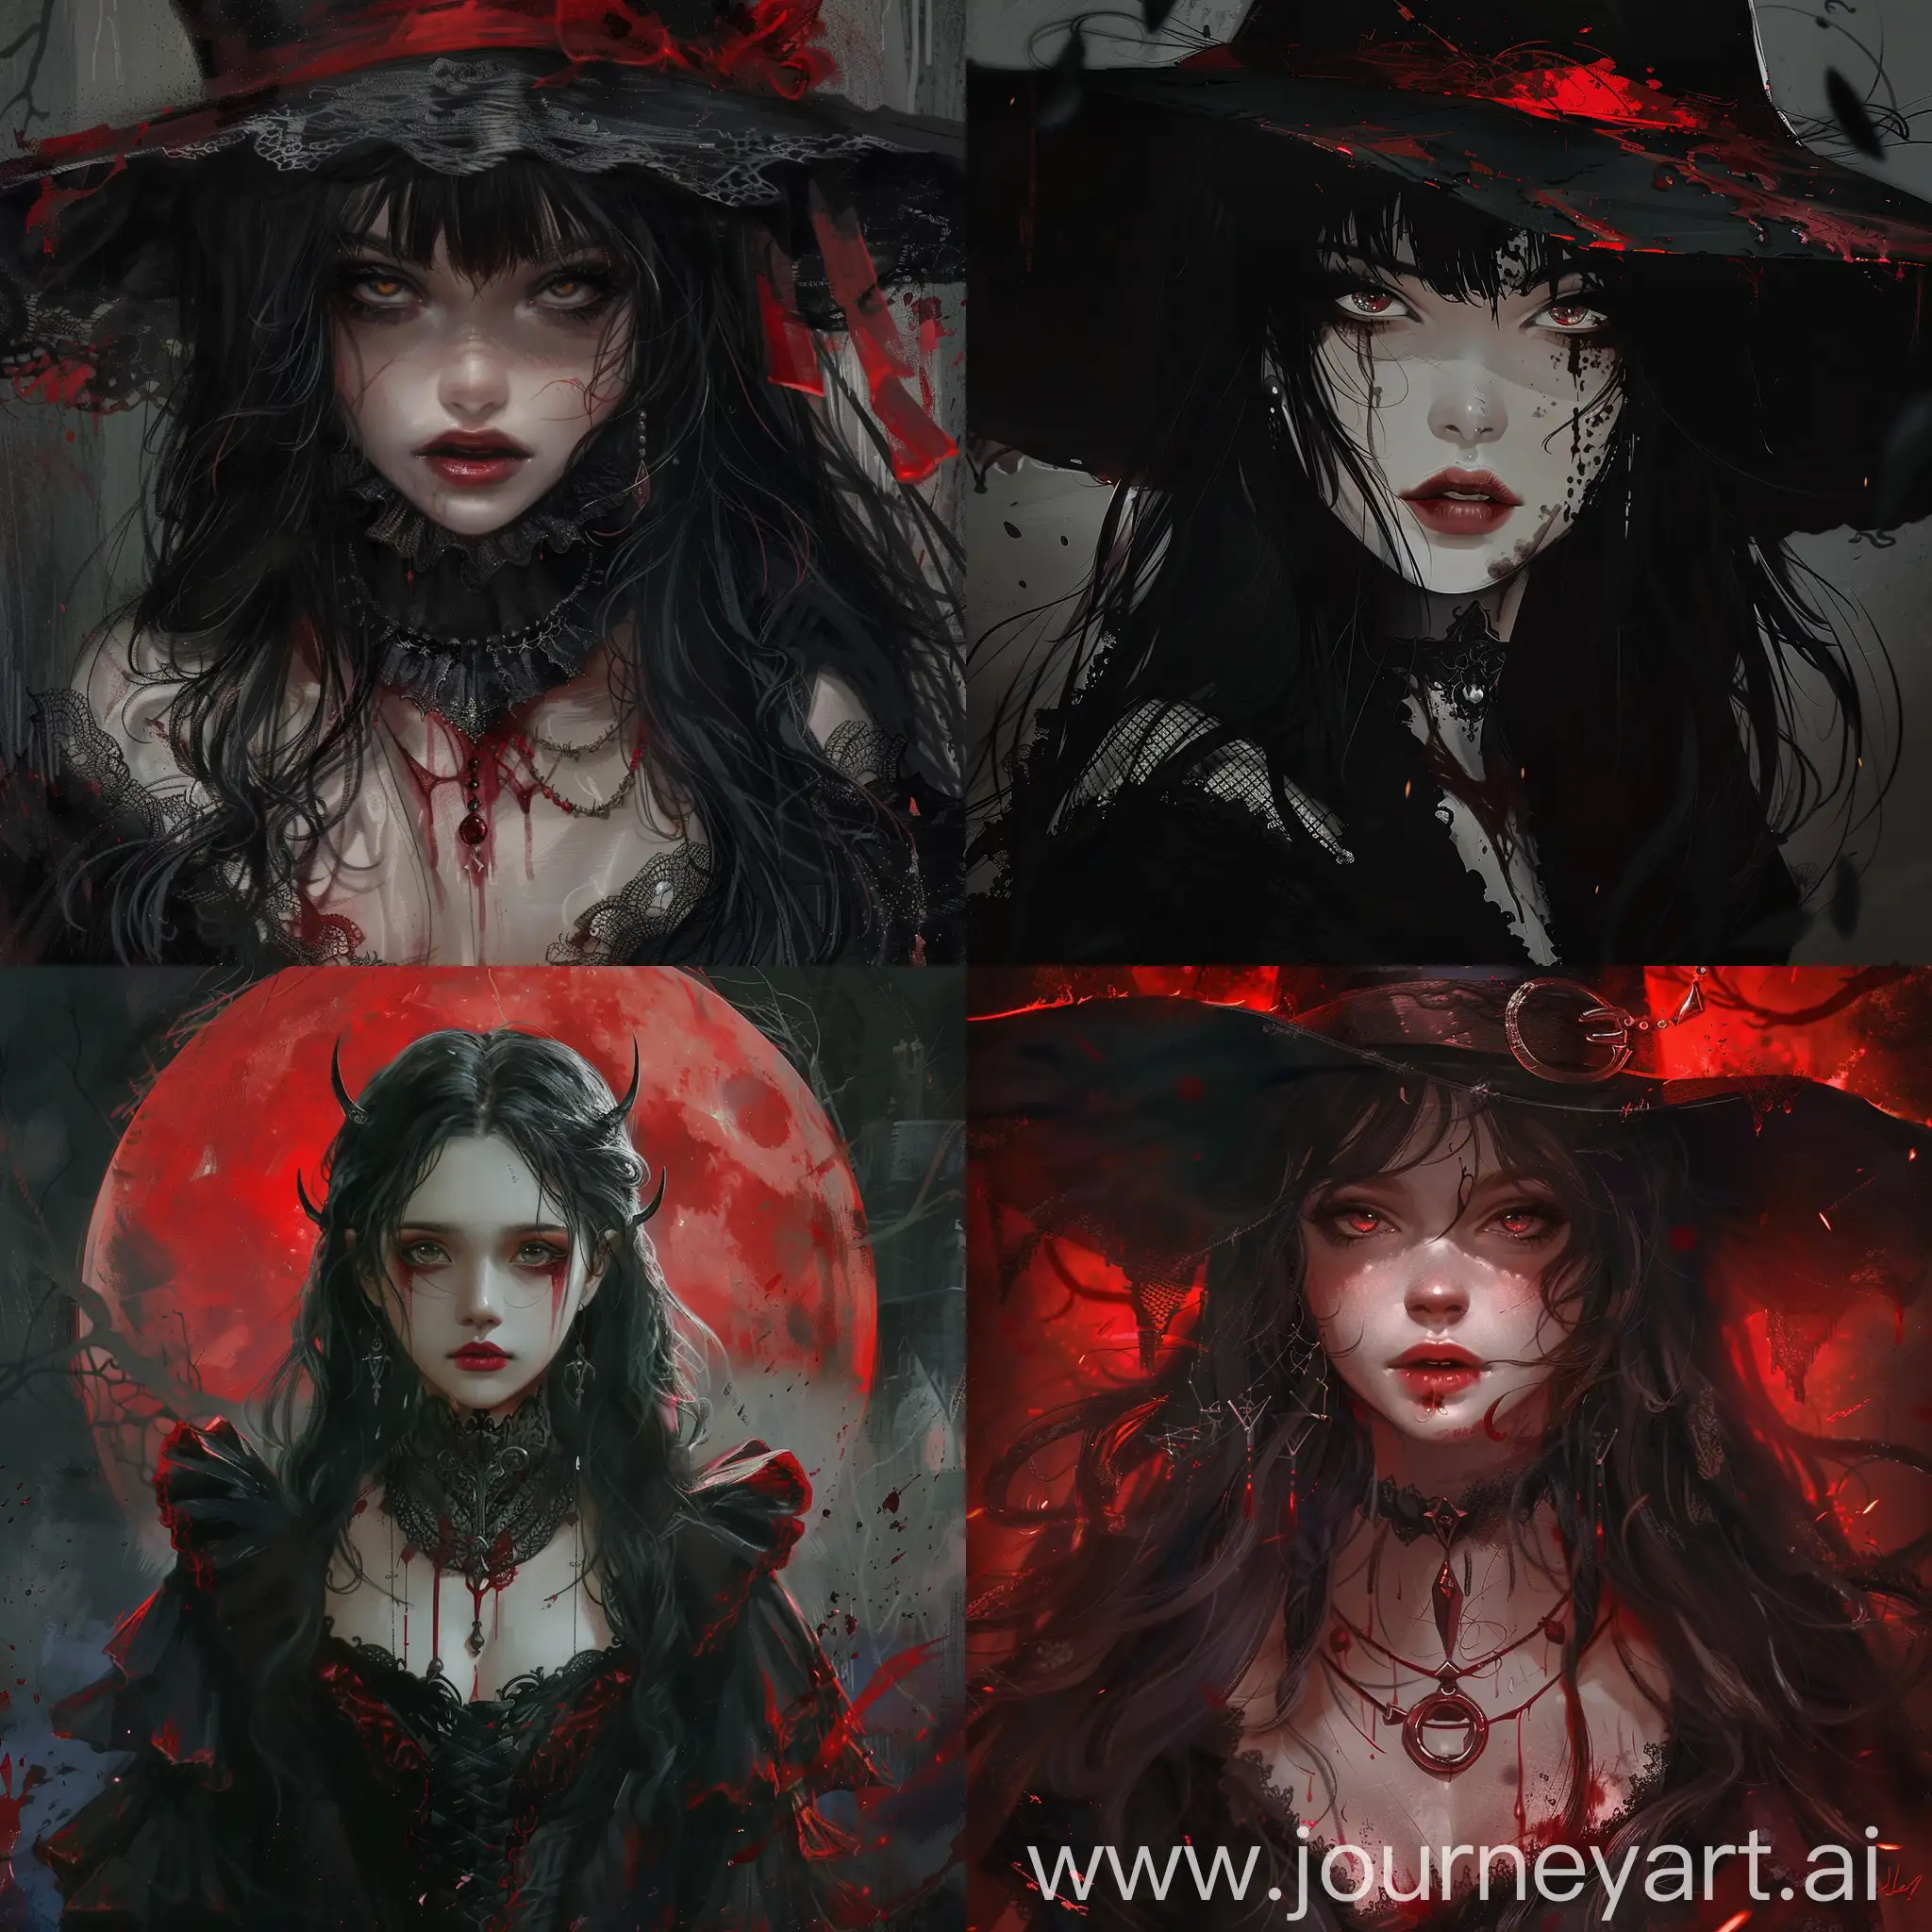 Dark fantasy, gothic horror, anime style, bloody witch